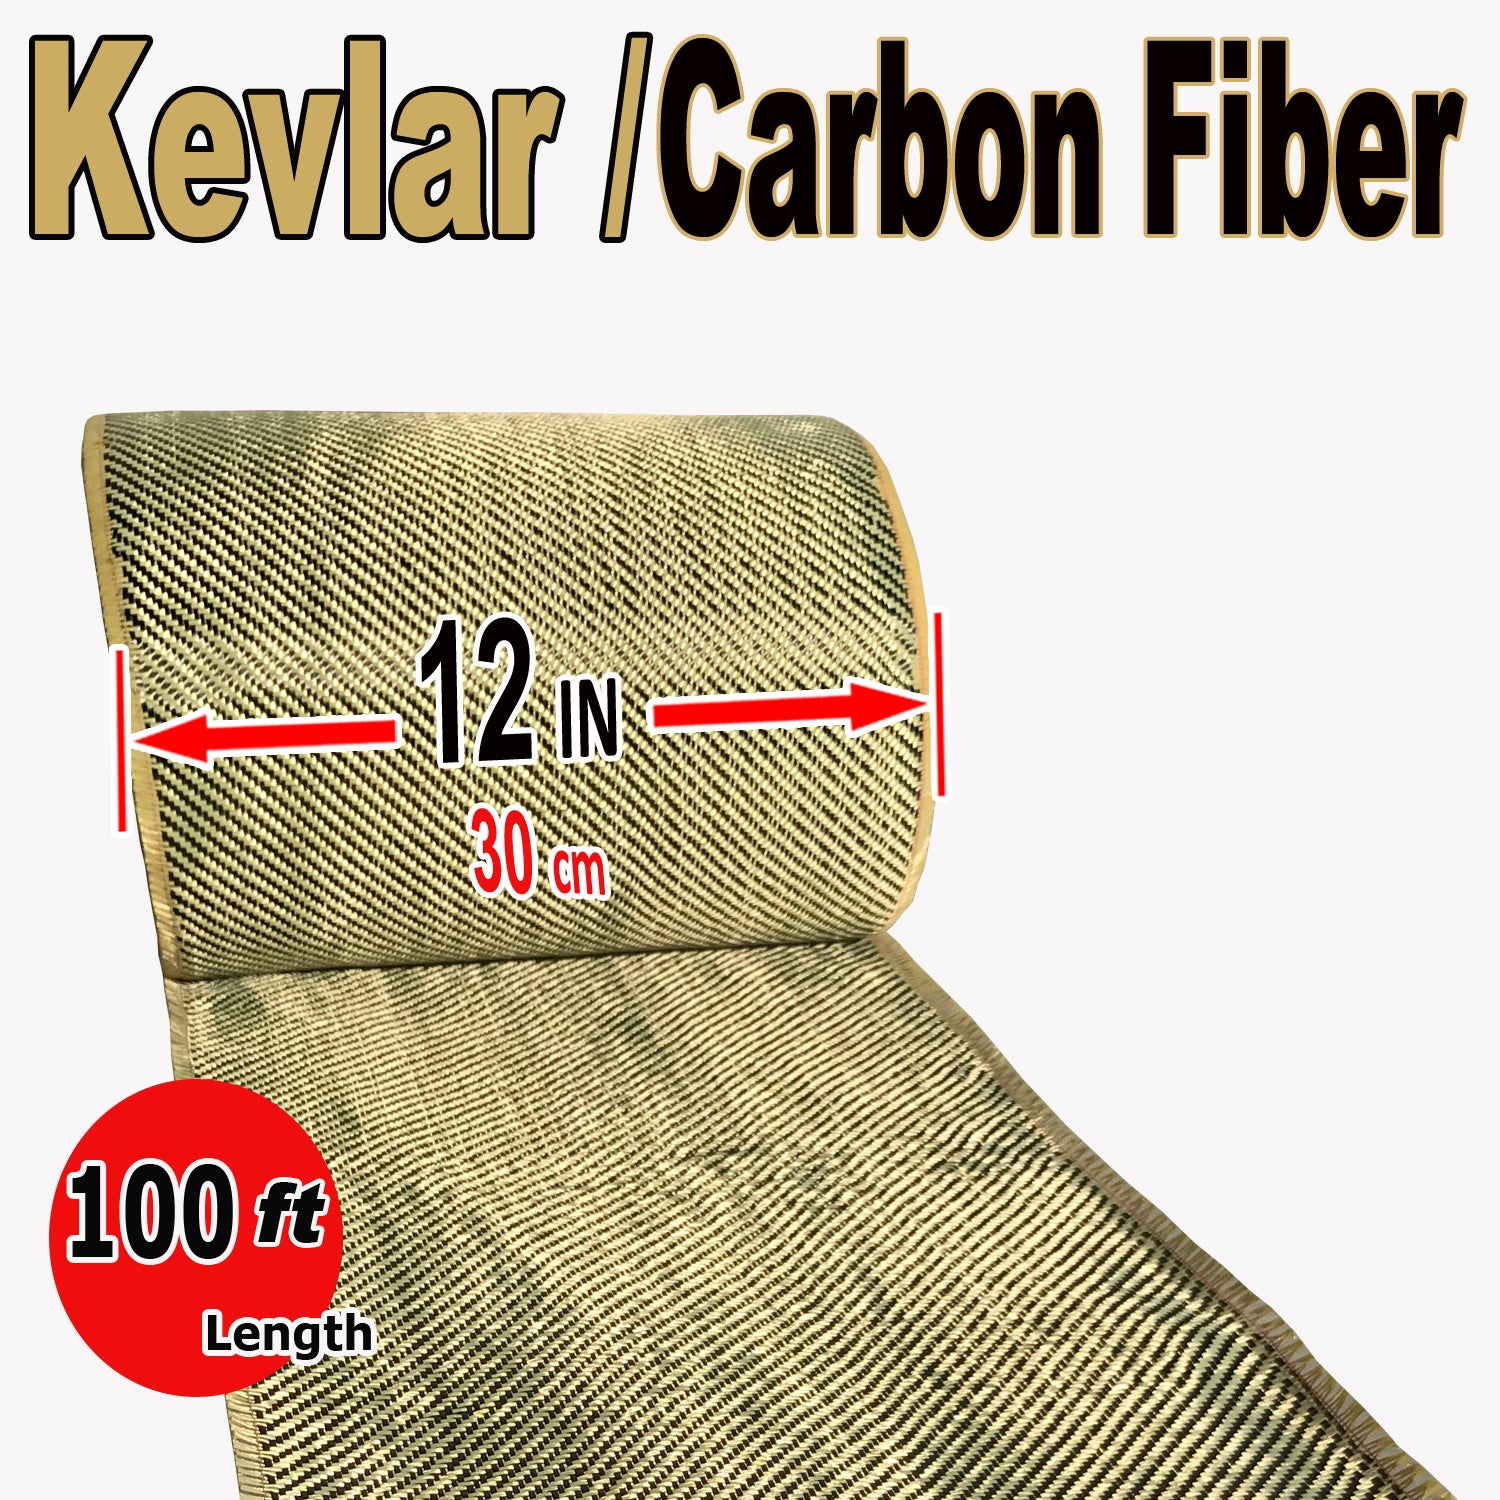 FMSC - 1.7 oz. Kevlar® Cloth - Plain Weave (Style #5120)